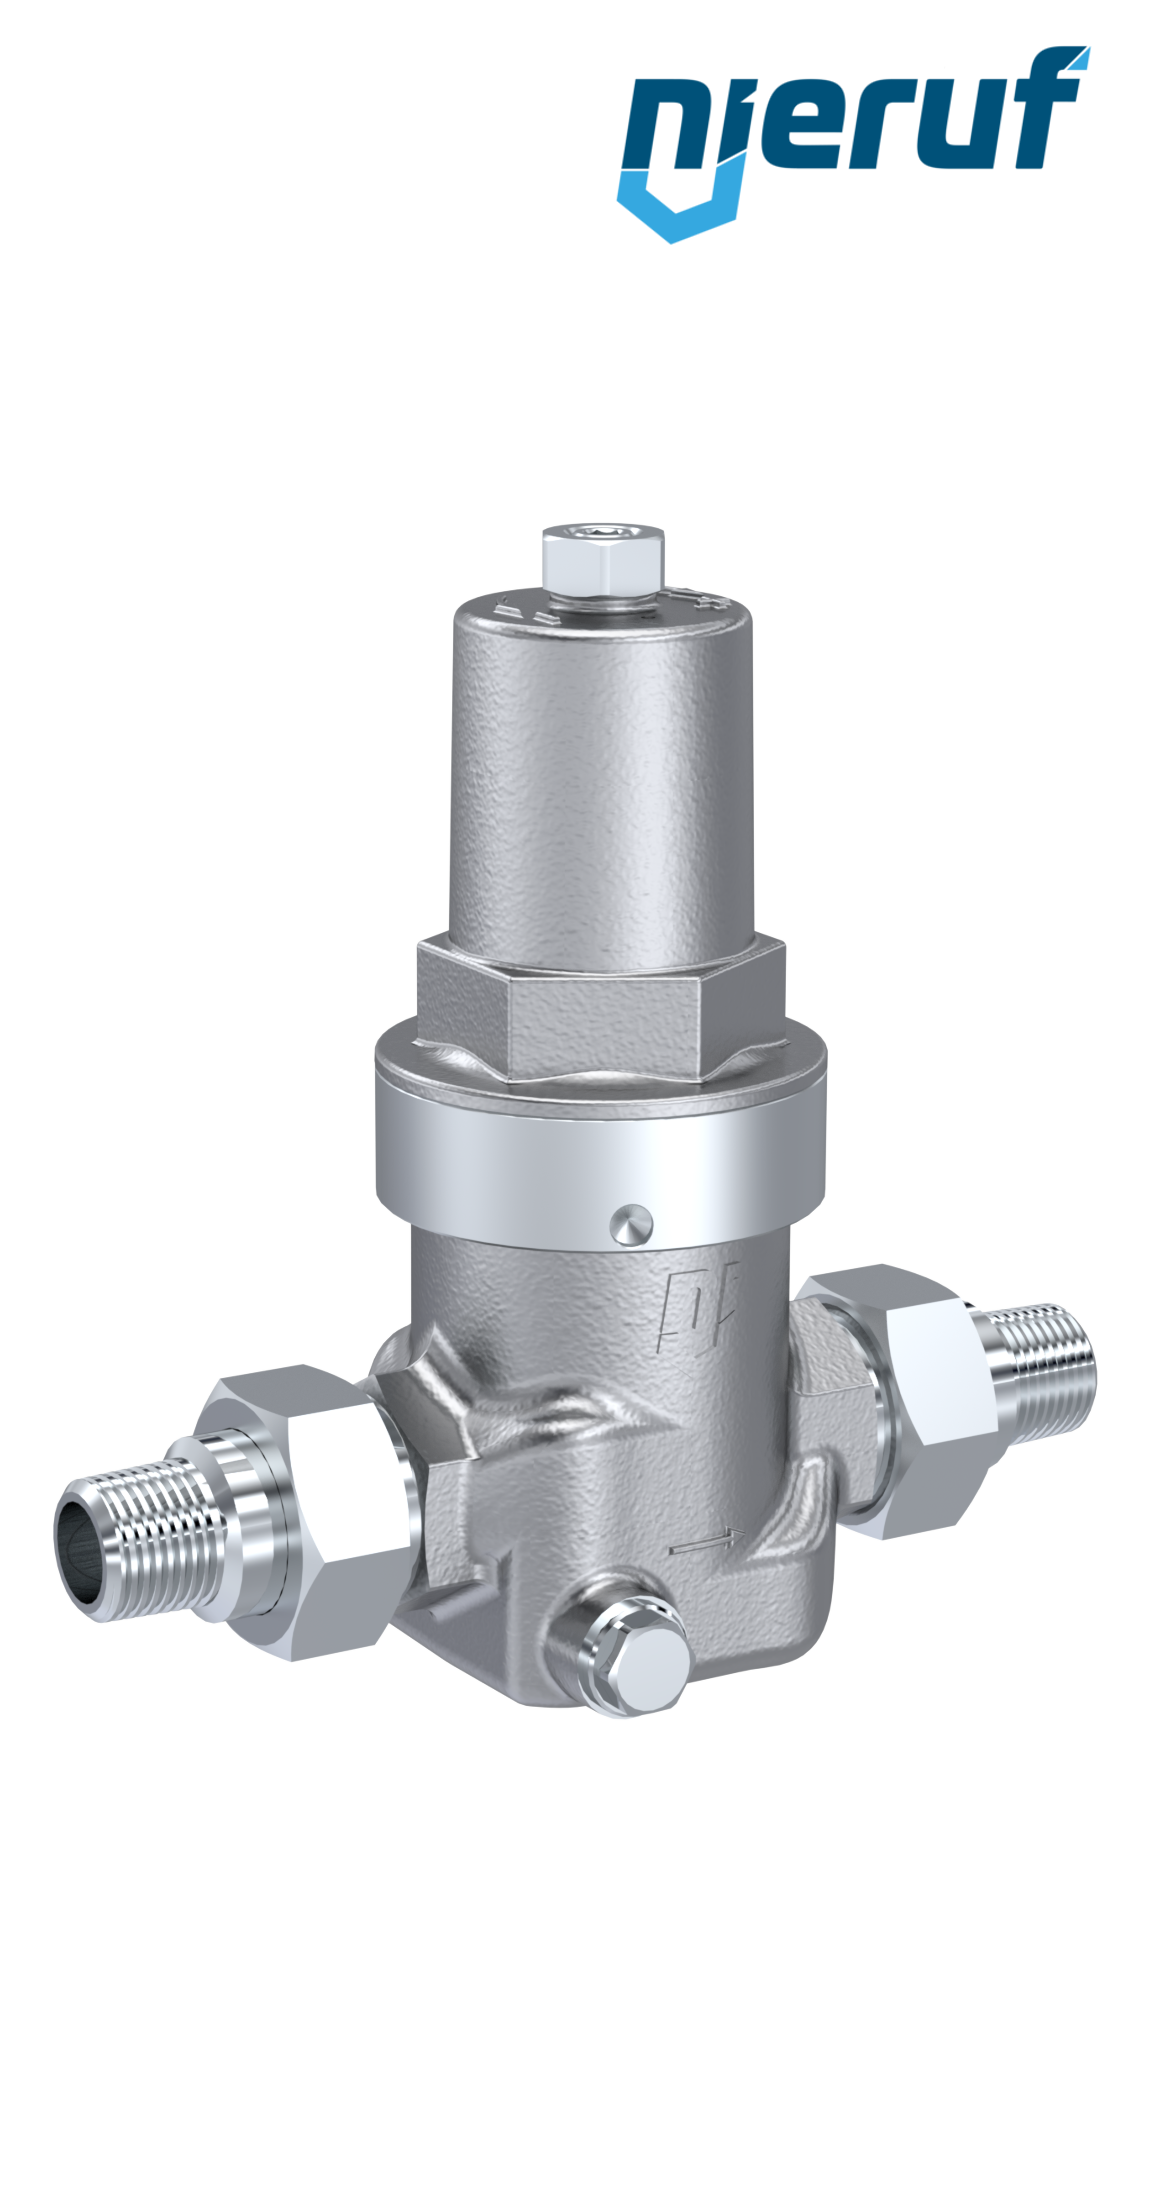 low-pressure reducing valve male thread 3/4" Inch DM12 stainless steel FPM 0.2 - 2.0 bar